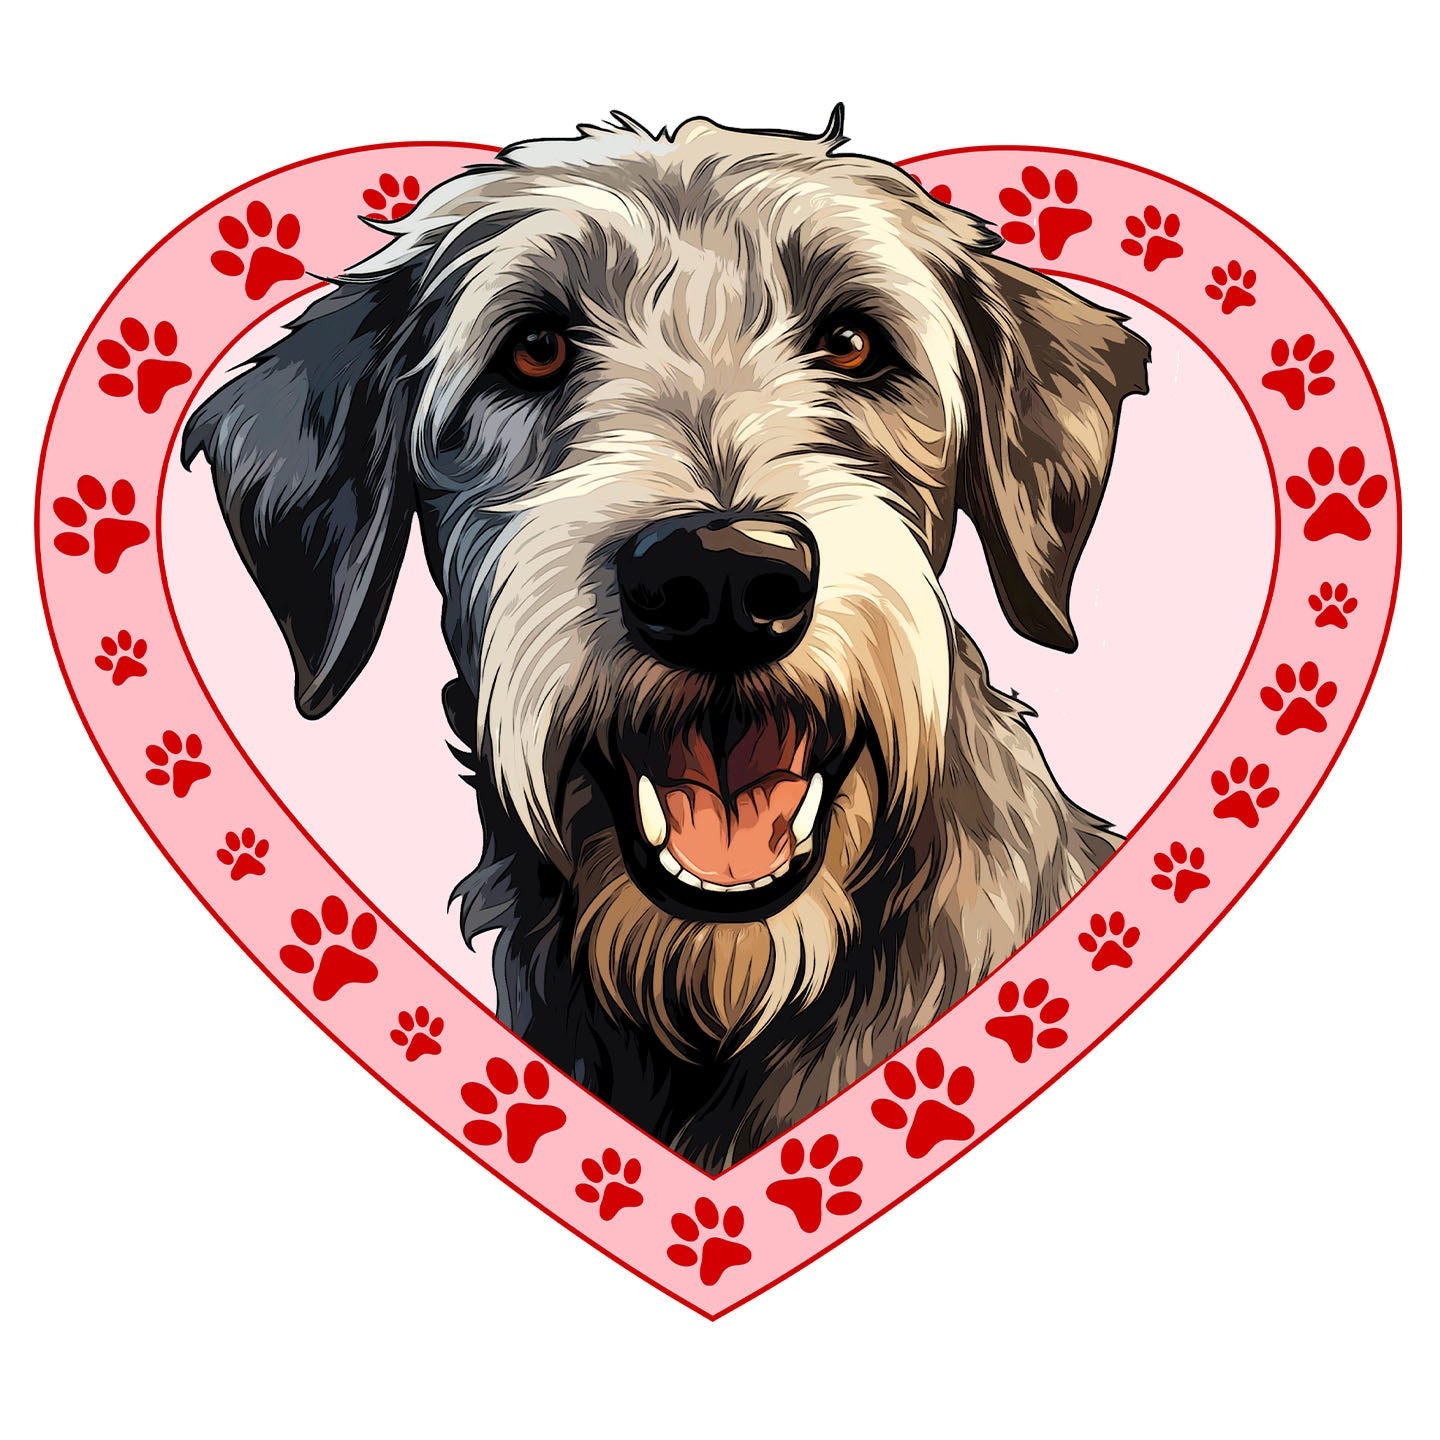 Irish Wolfhound Illustration In Heart - Adult Unisex T-Shirt